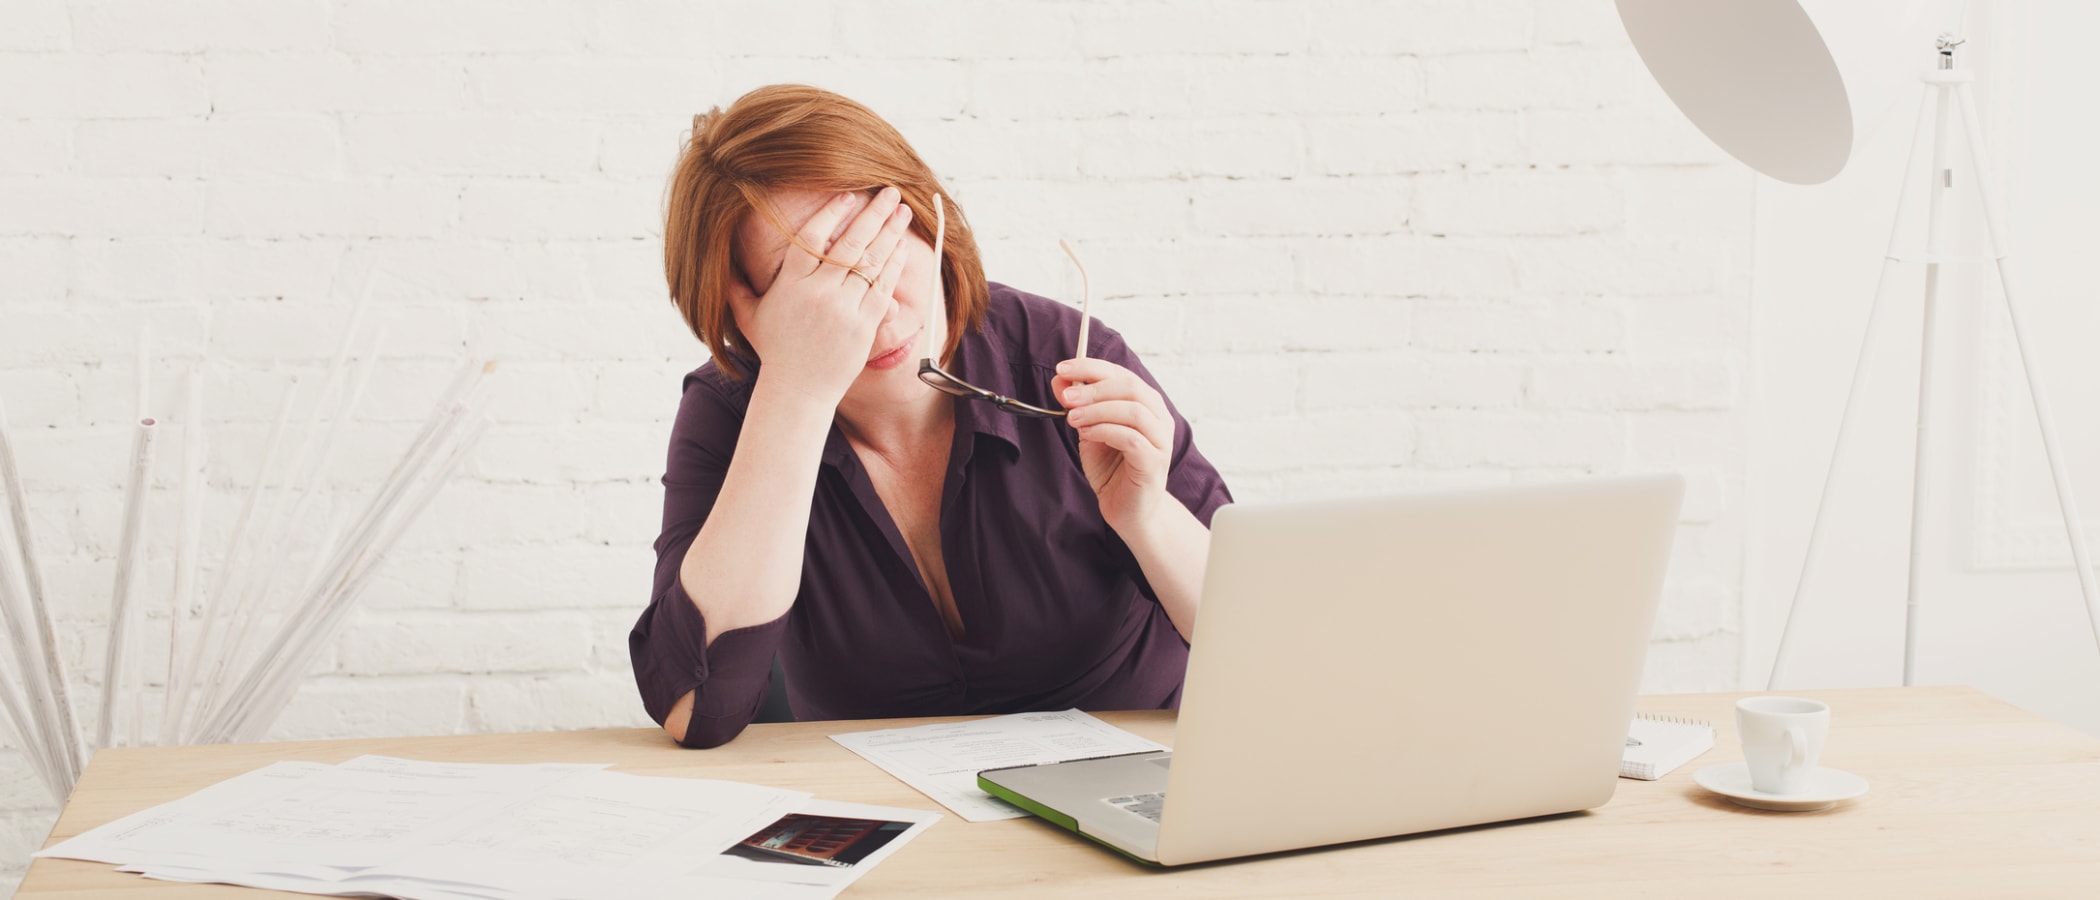 Why Women Disengage at Work